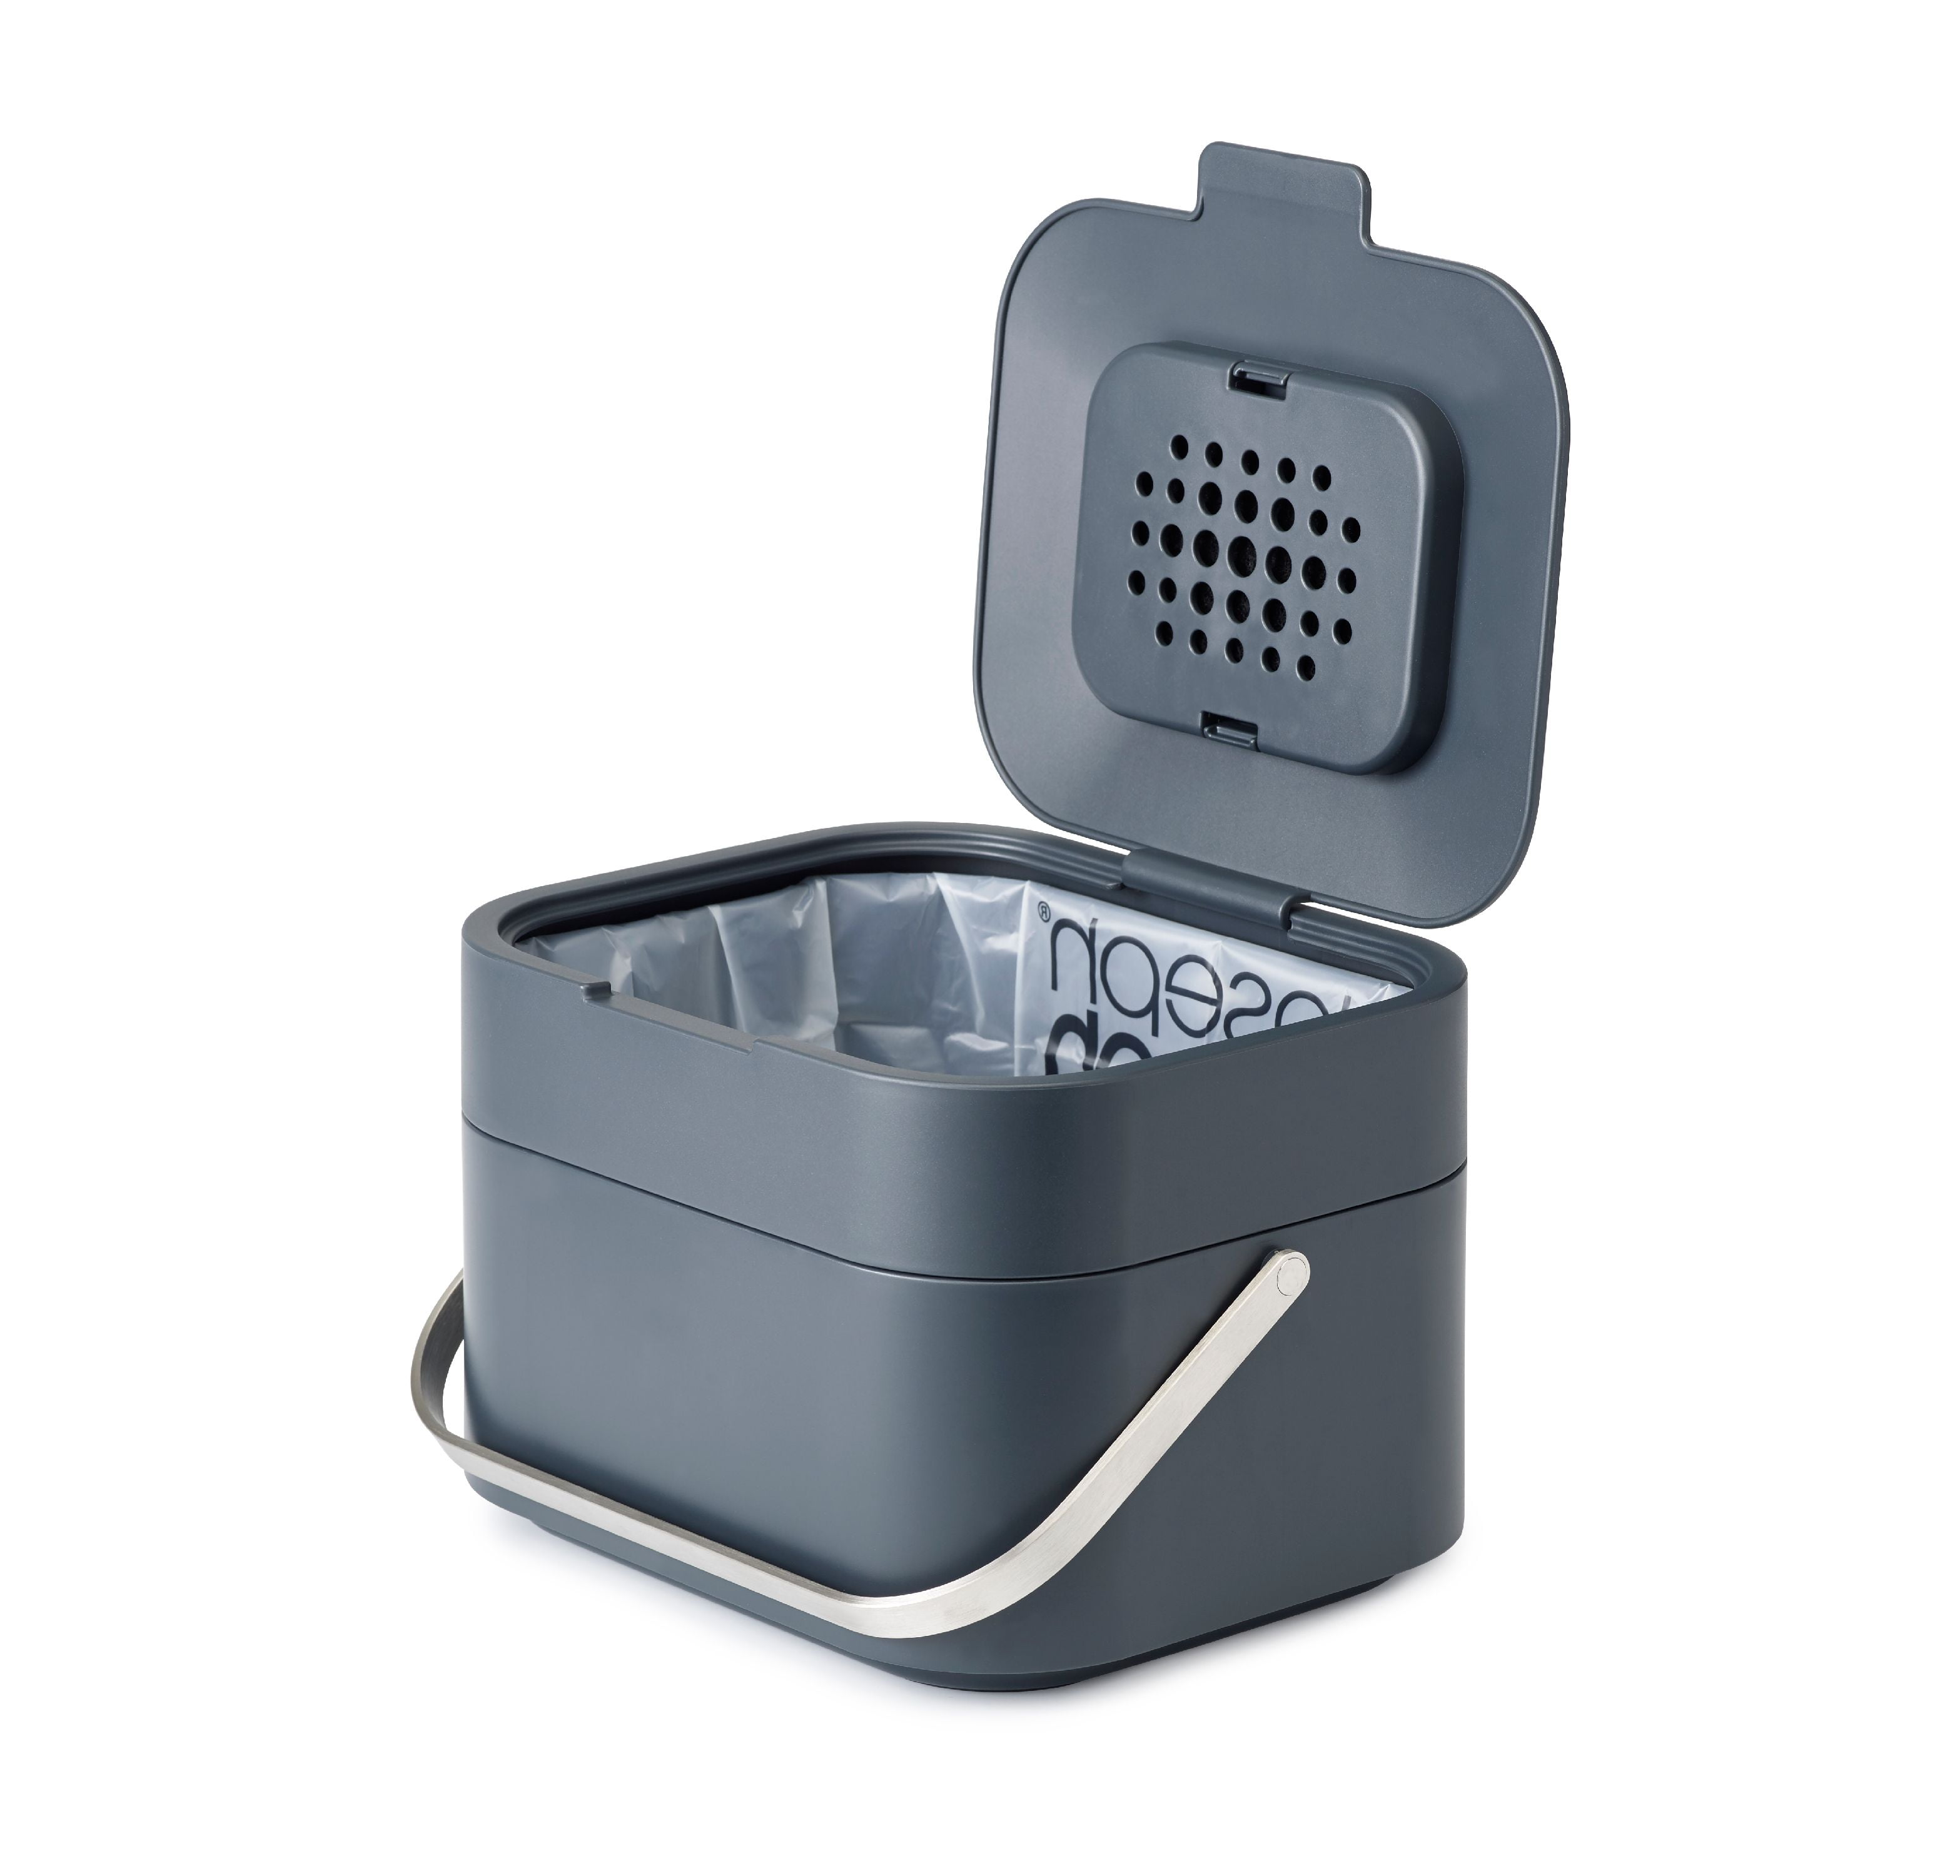 Compost Caddy  Dishwasher Safe Kitchen Compost Bin – Free Shipping